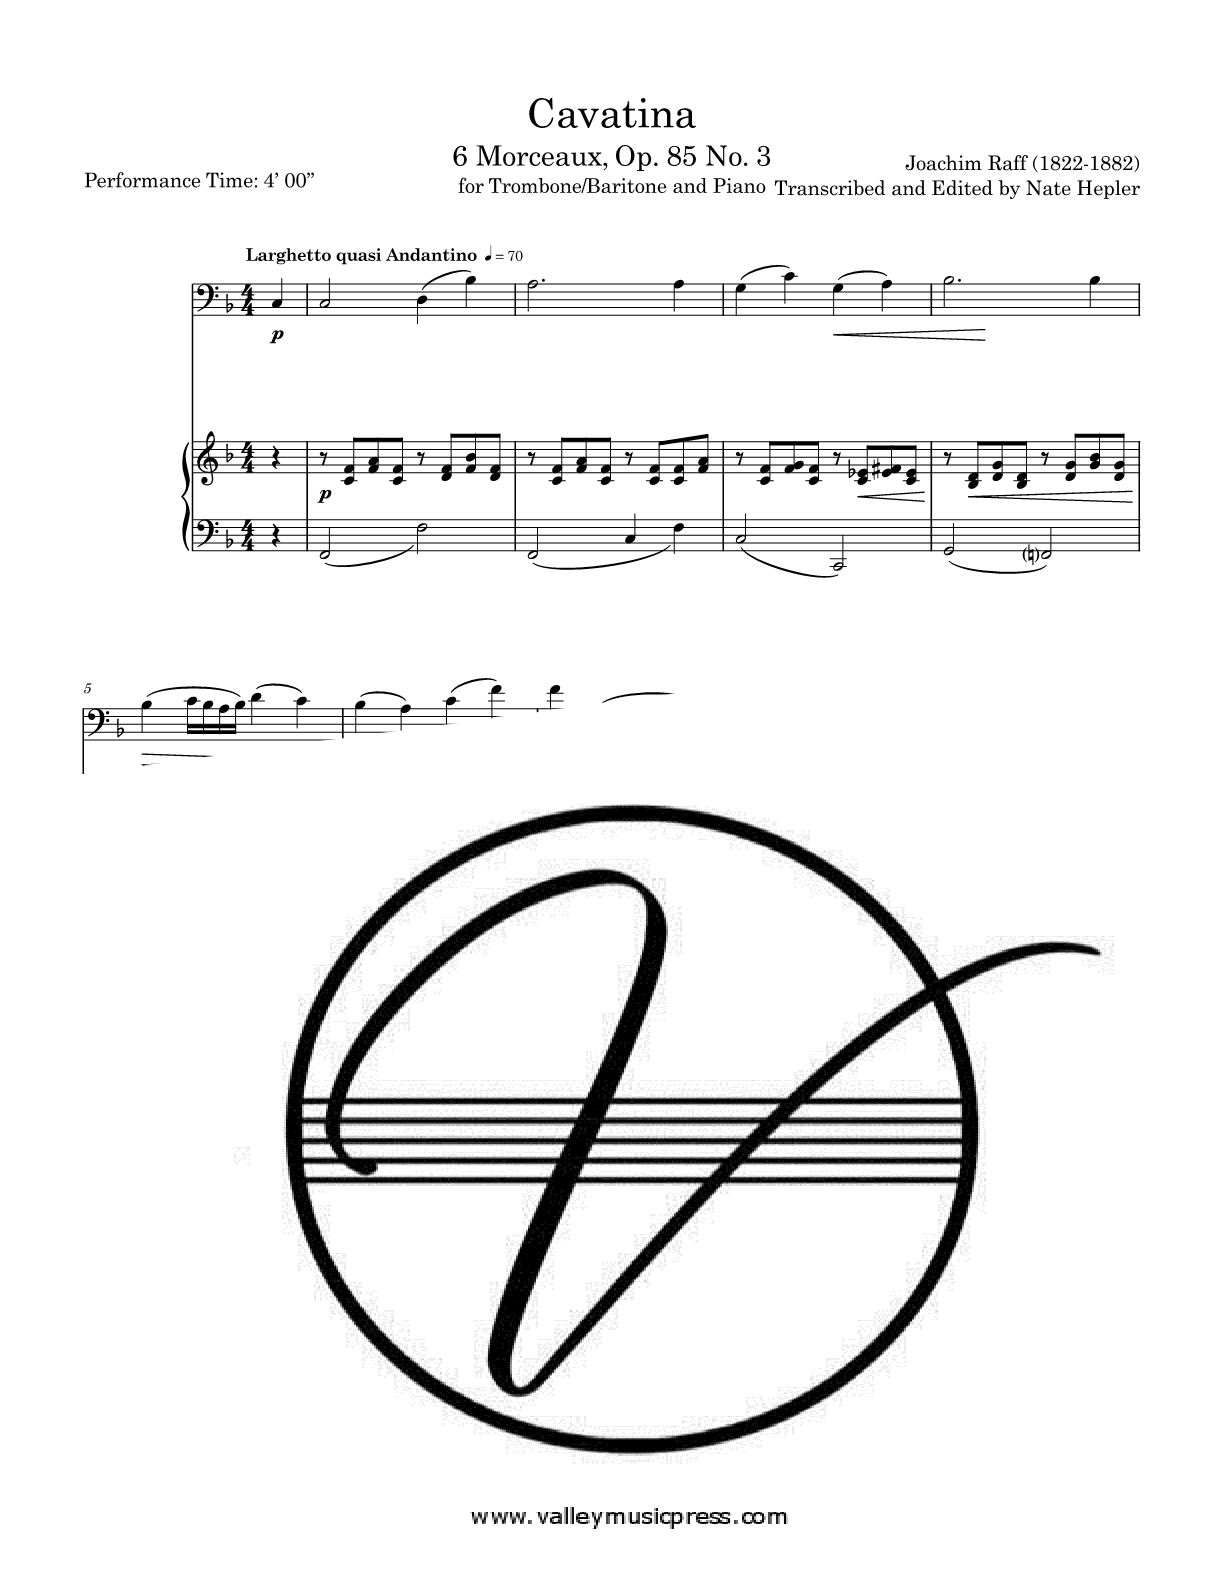 Raff - Cavatina - 6 Morceaux Op. 85 No. 3 (Trombone & Piano)